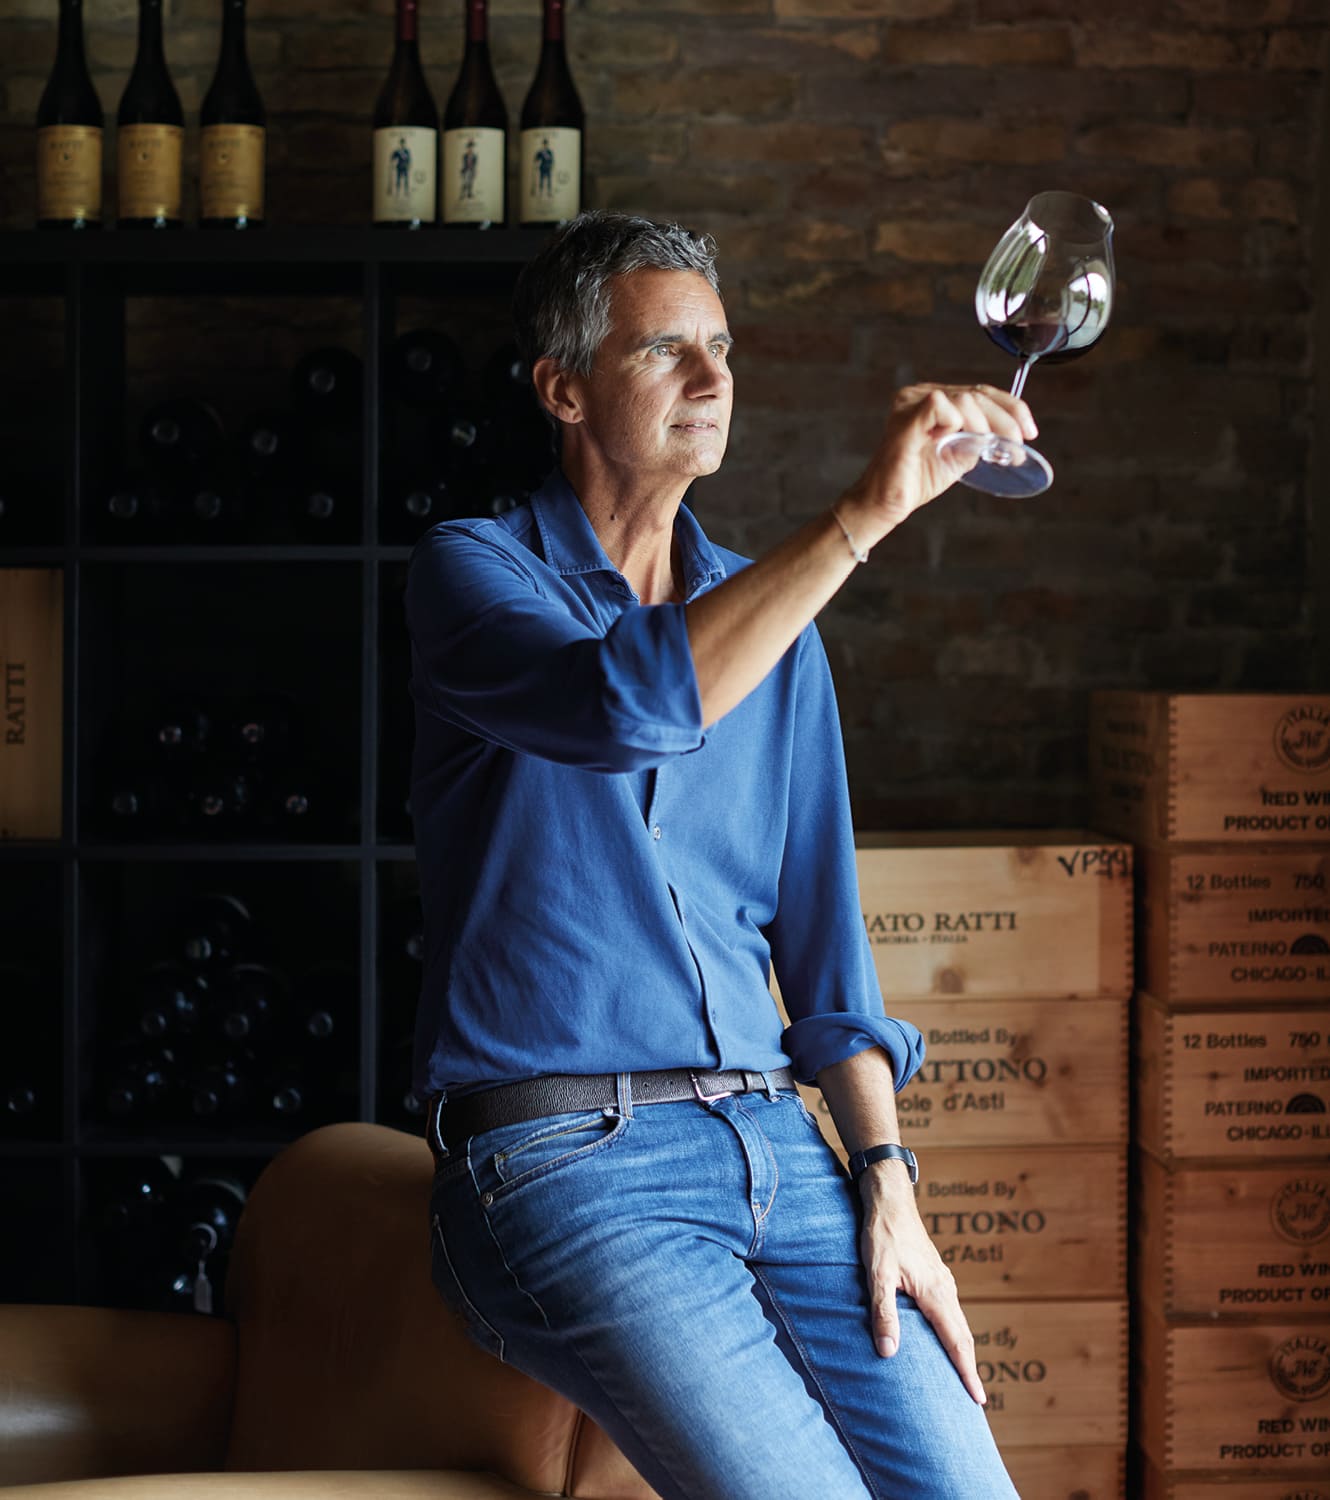 Pietro Ratti Maze Row Wines